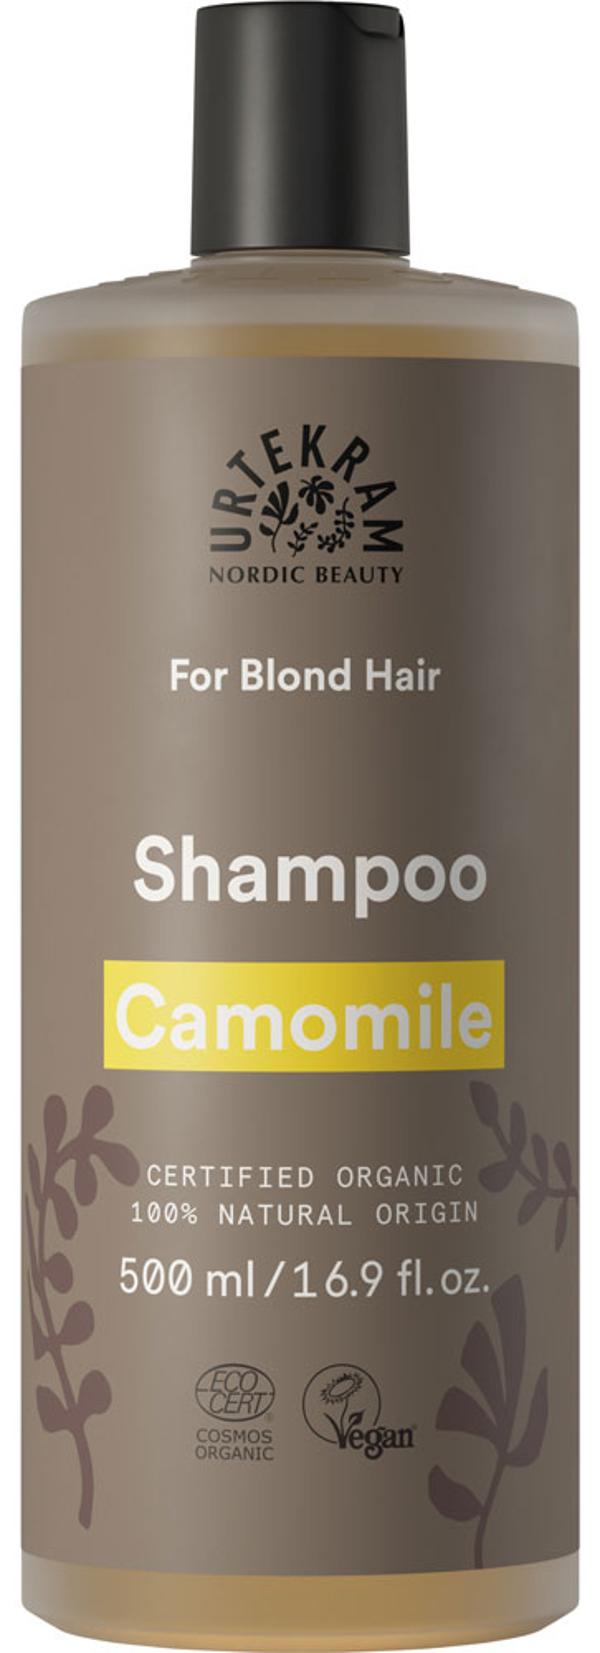 Produktfoto zu Urtekram Kamille Shampoo 500ml